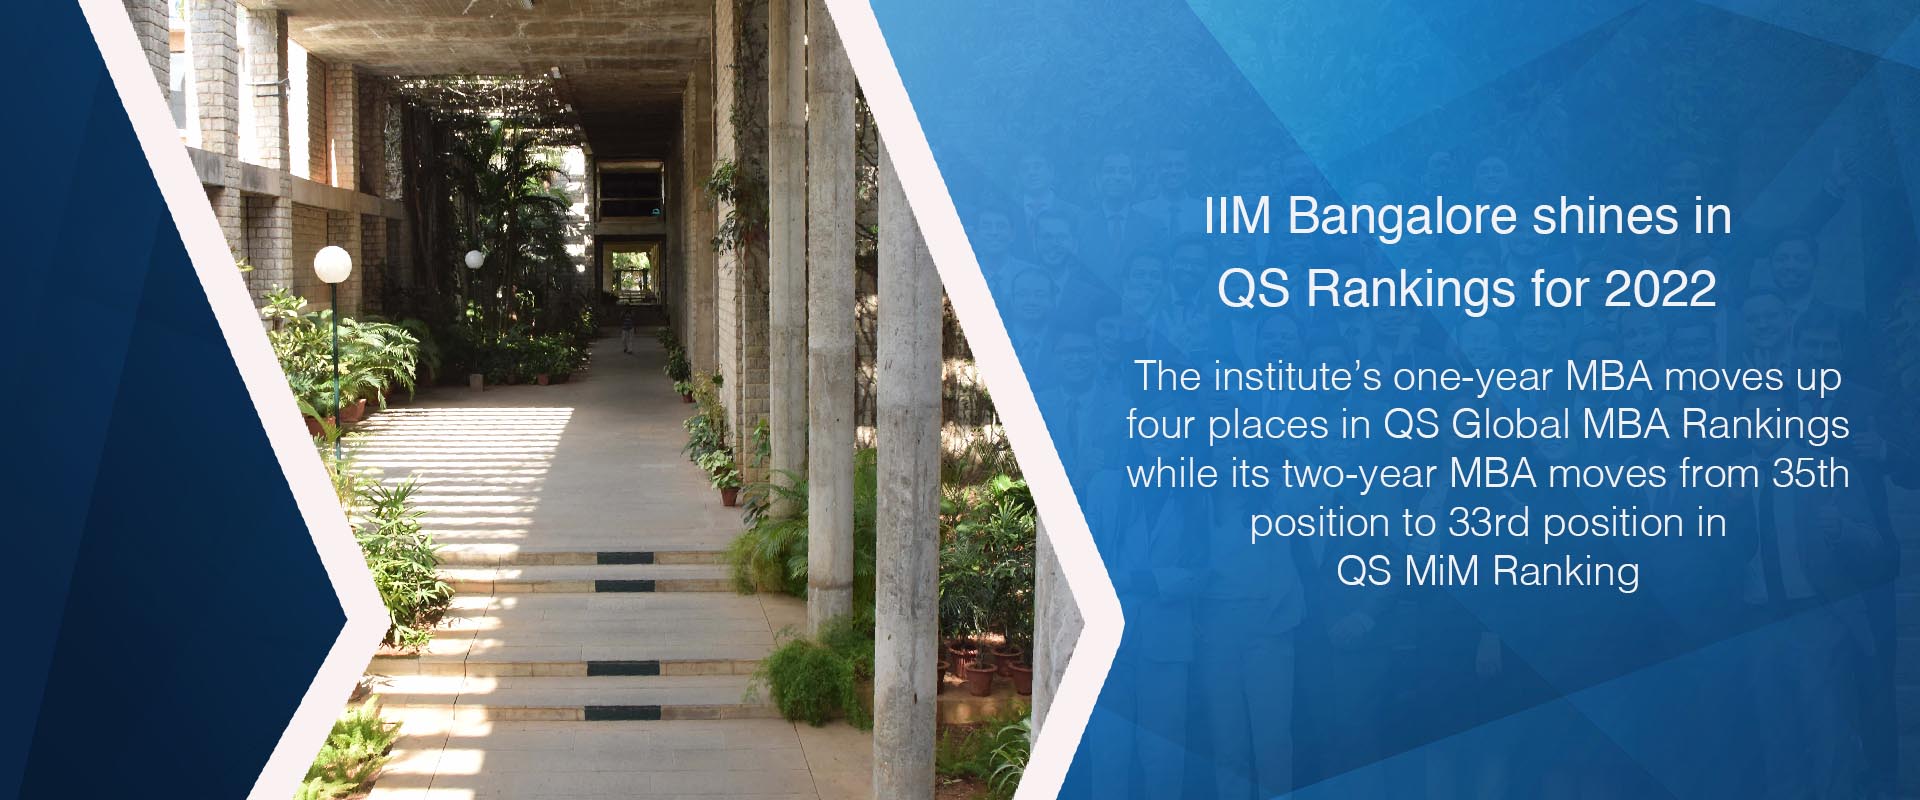 IIM Bangalore shines in QS Rankings for 2022